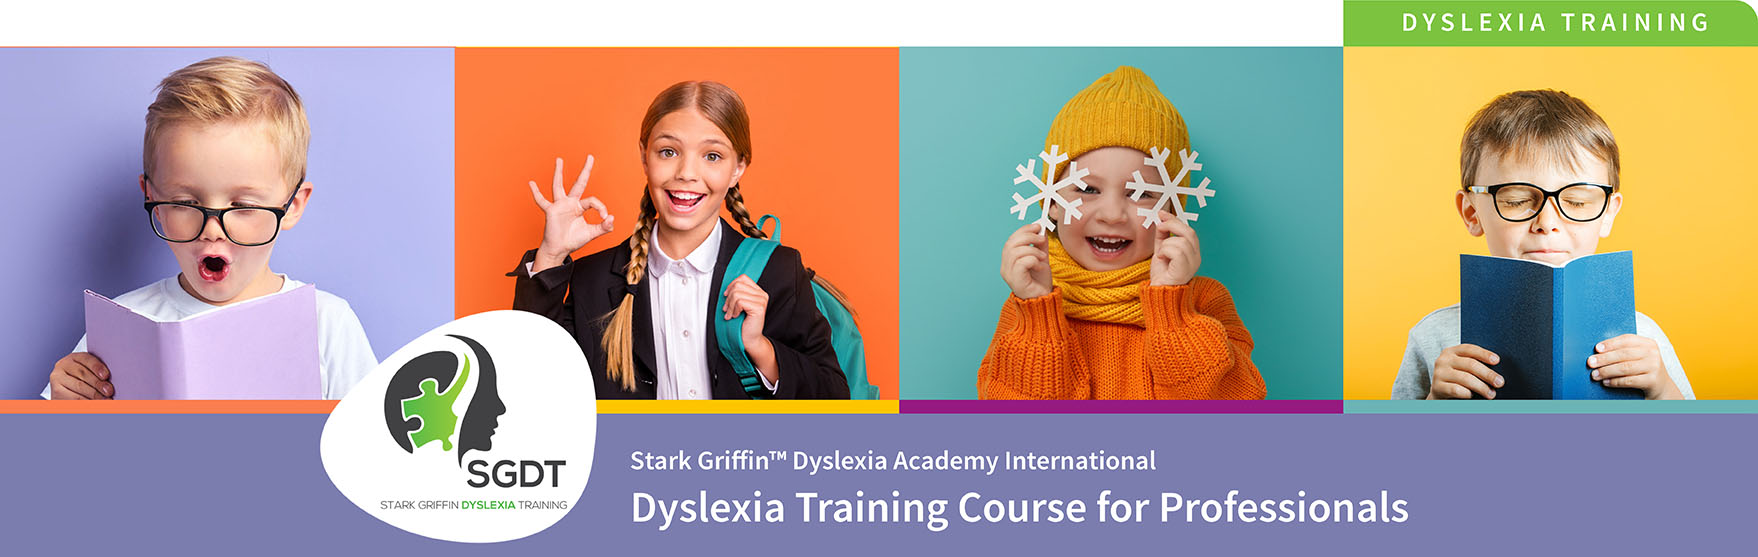 sgda dyslexia training course professioanals